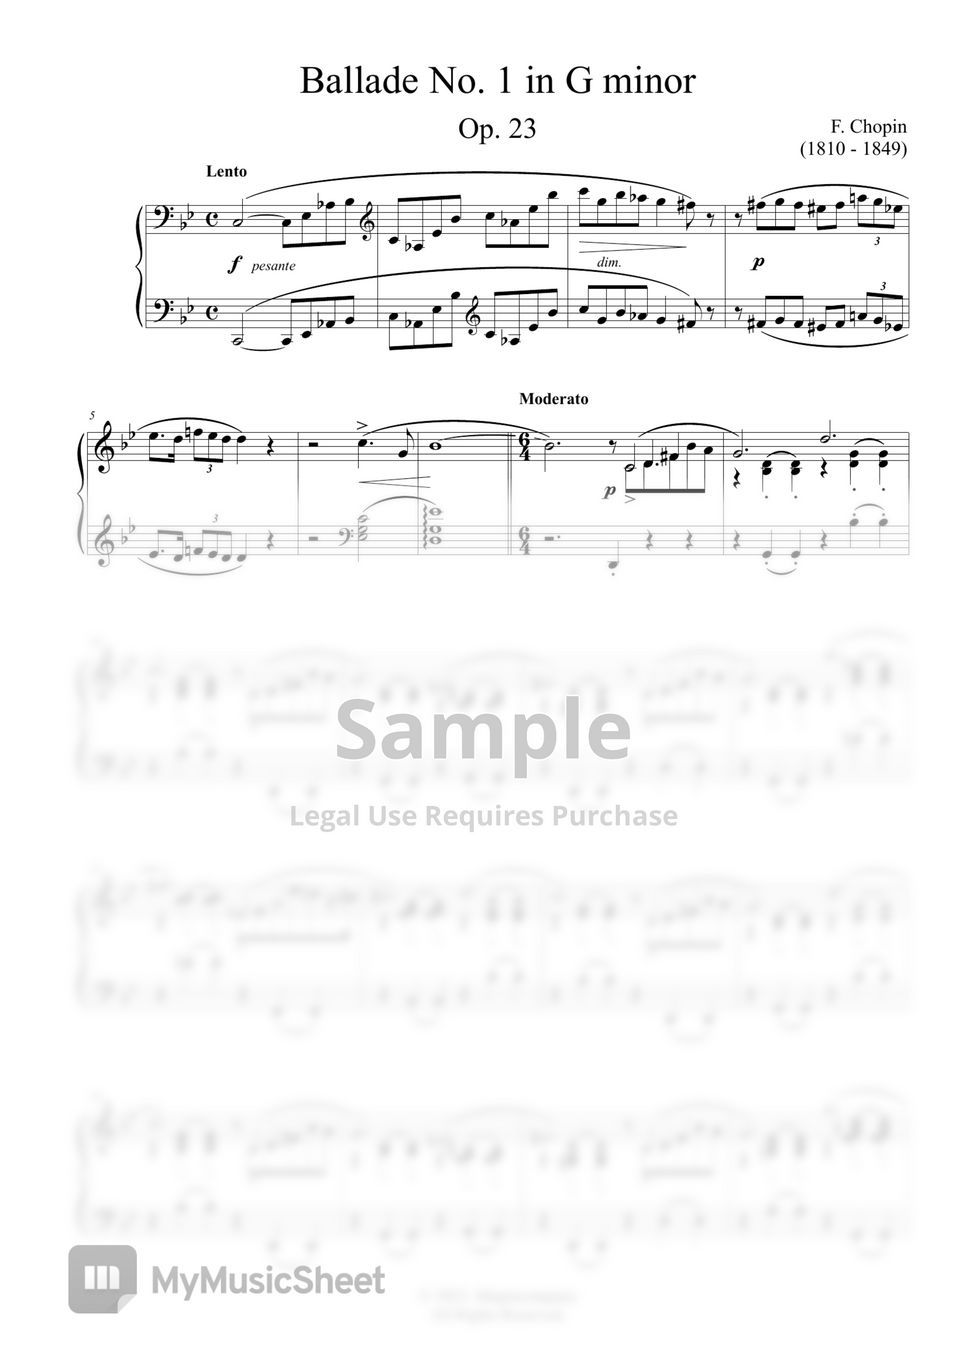 F. Chopin - Ballade No.1 in G minor (Op.23)